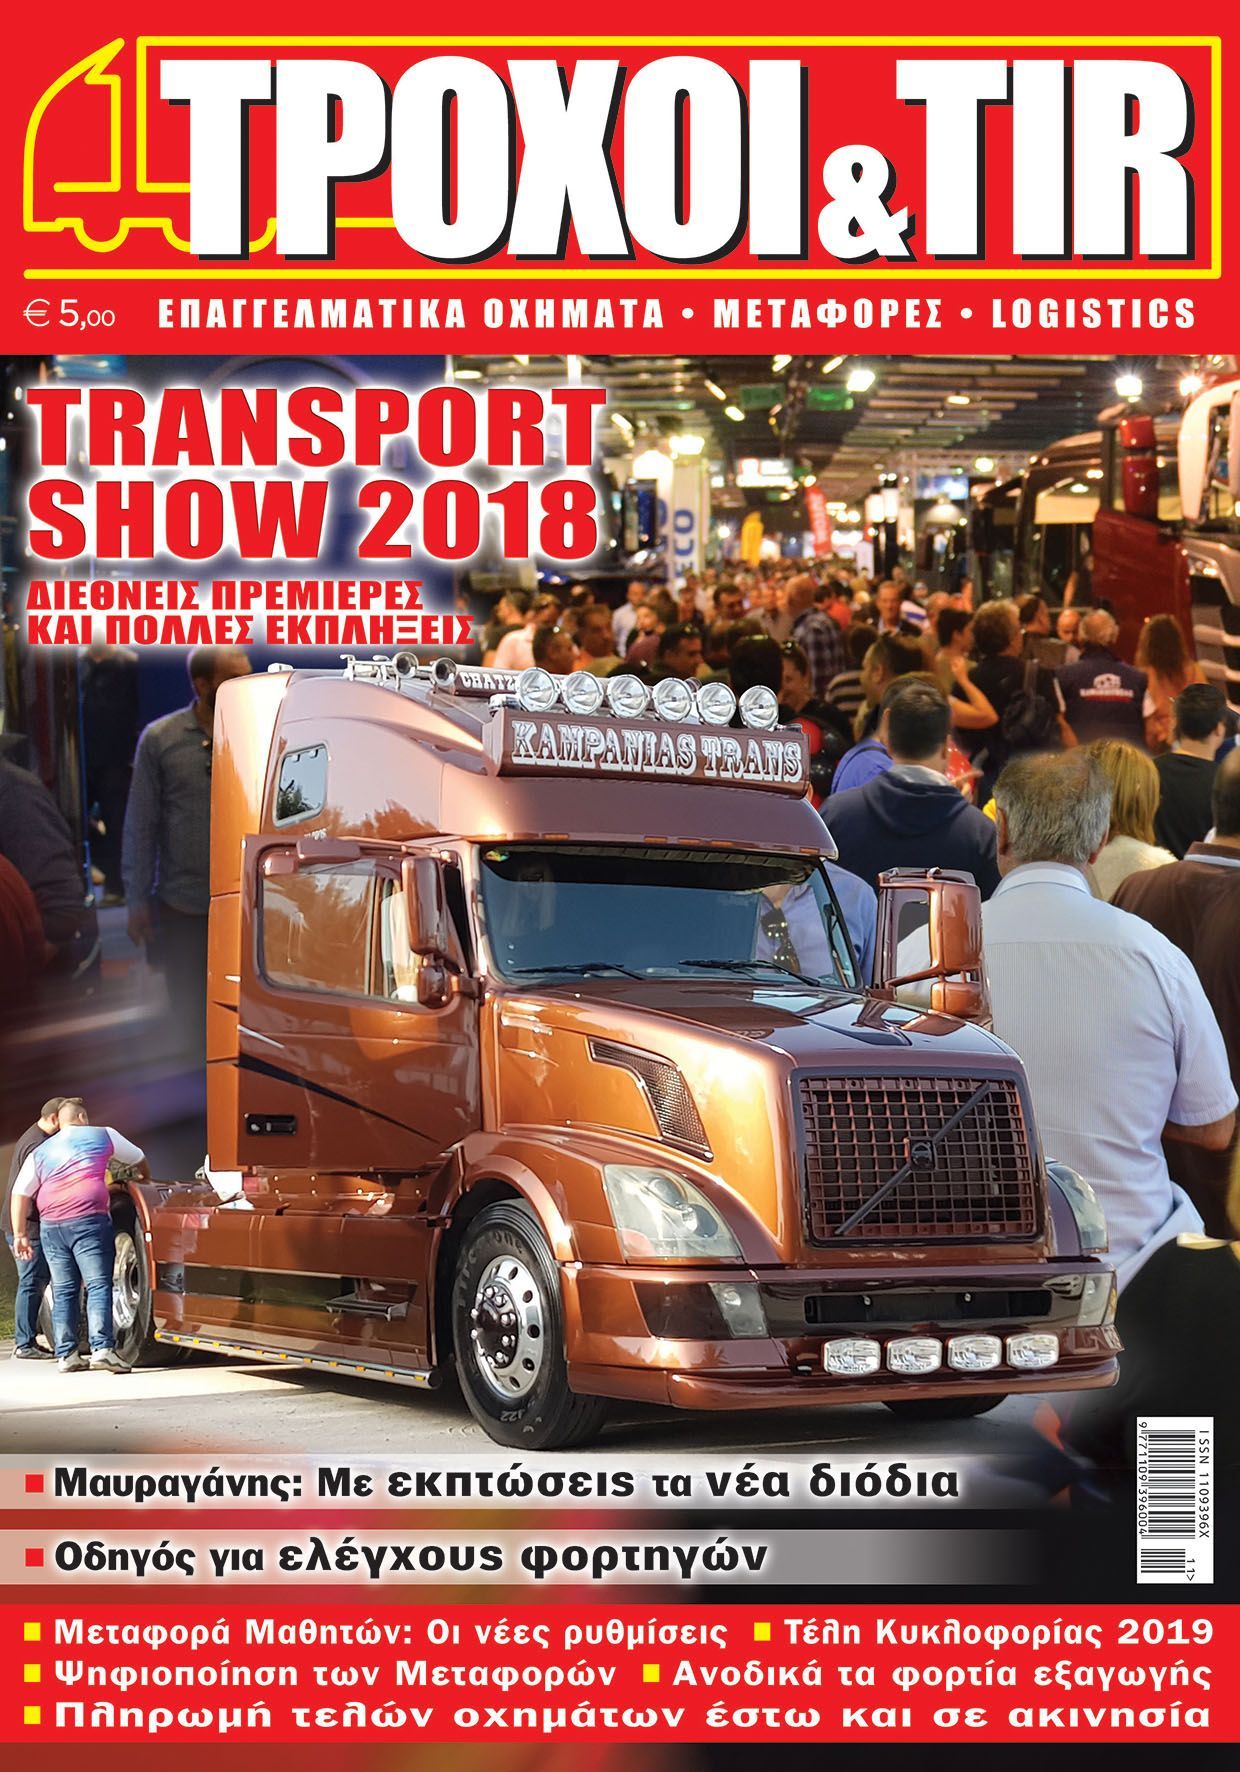 Troxoikaitir issue 367 november 2018 cover